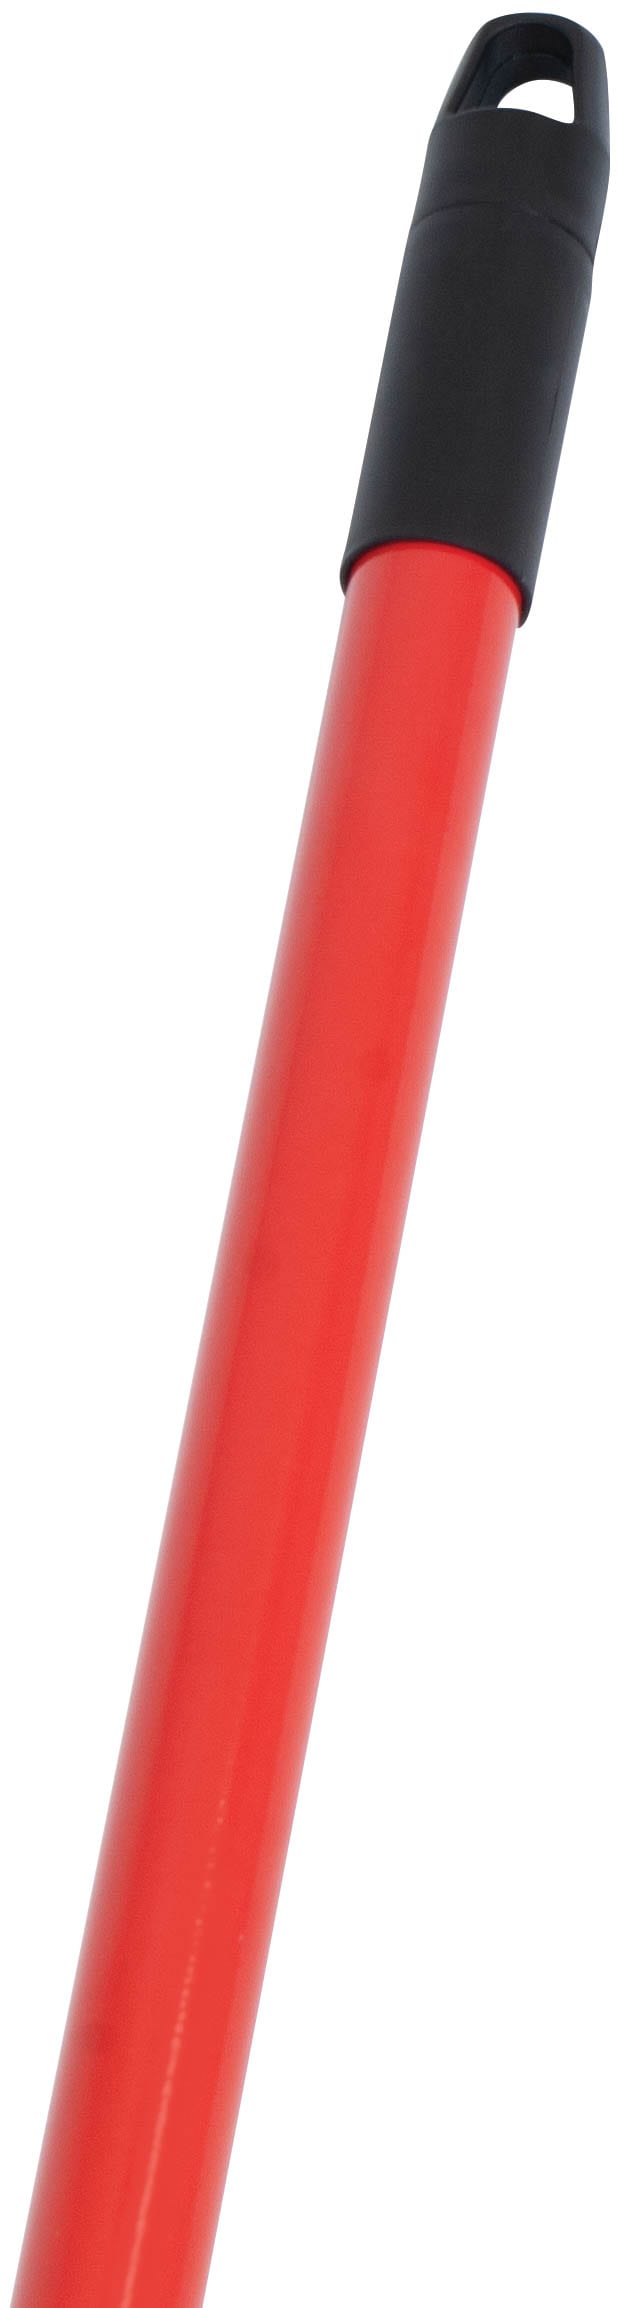 Craftsman 10-in Poly Fiber Soft Deck Brush in Red | CMXMLBA7310A